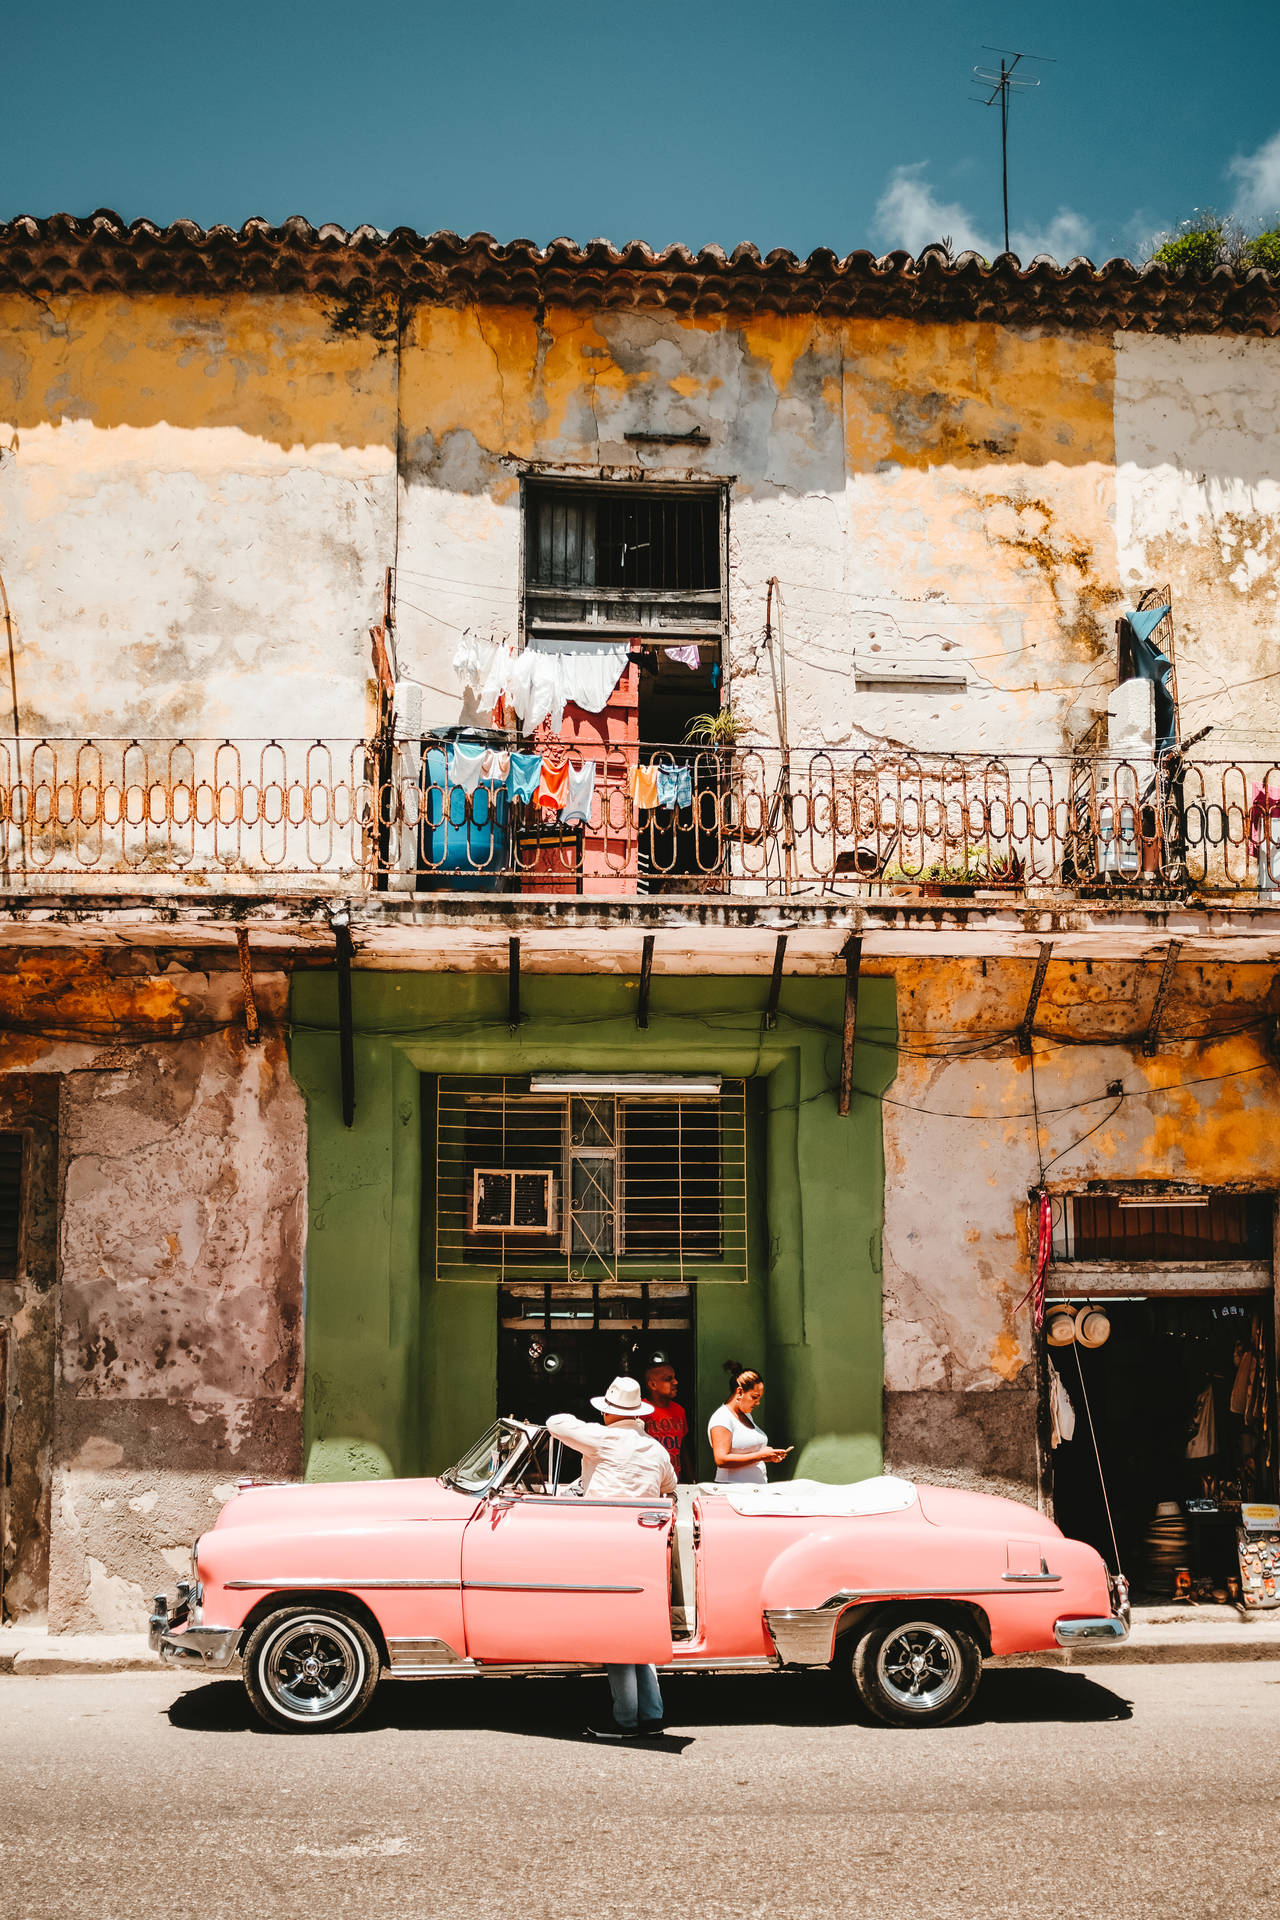 Lyserød Bil Parkeret På Cubansk Gade Wallpaper